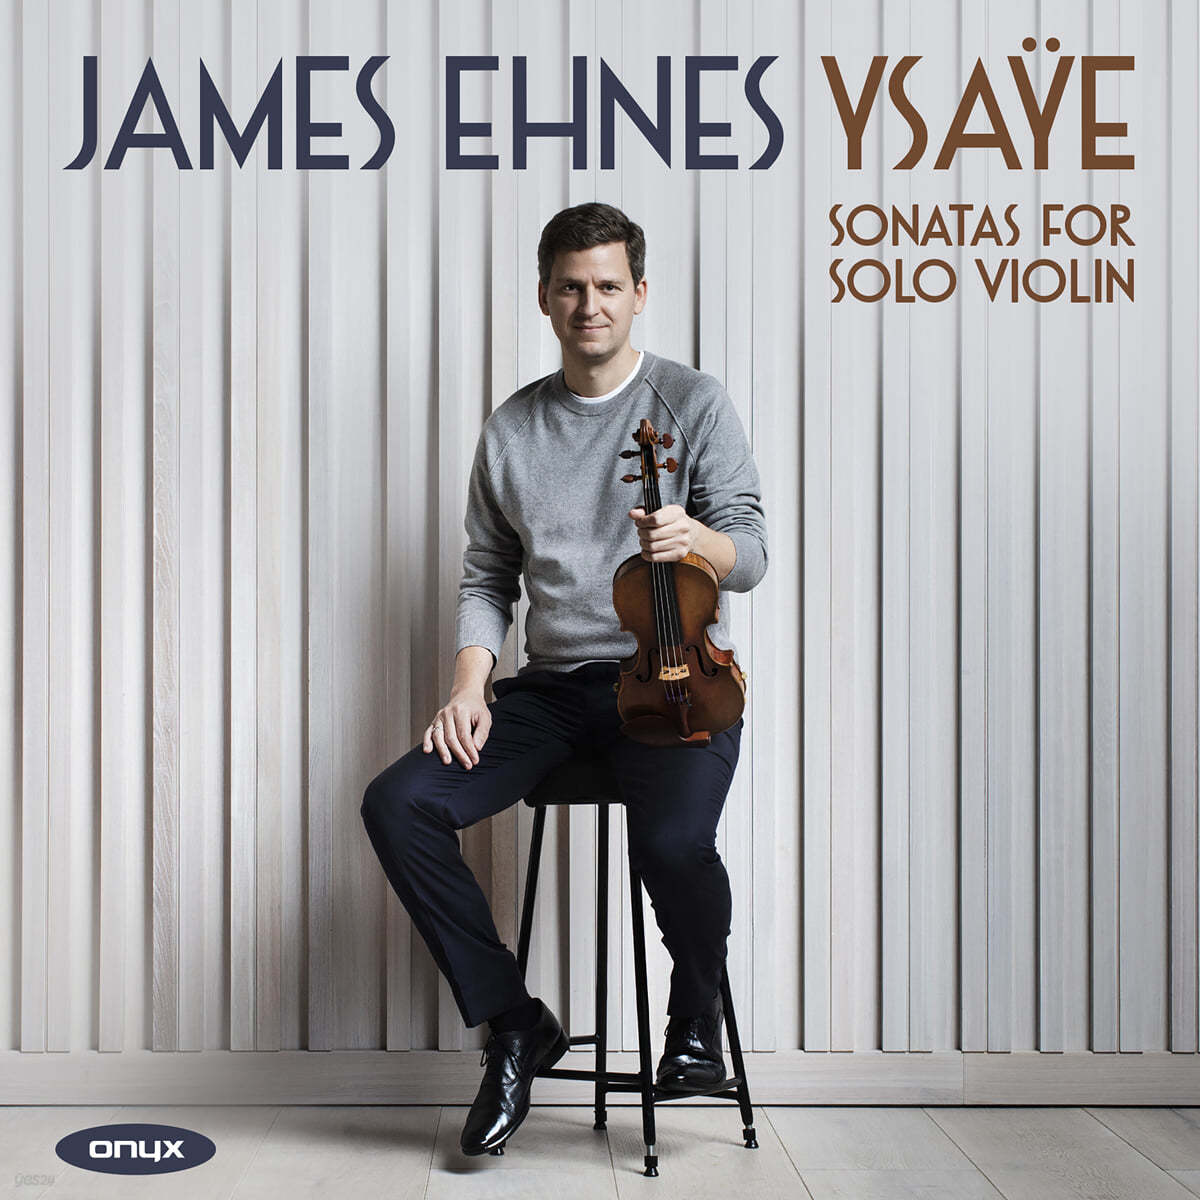 James Ehnes 이자이: 무반주 바이올린 소나타 - 제임스 에네스 (Ysaye: Six Sonatas for Solo Violin, Op.27)